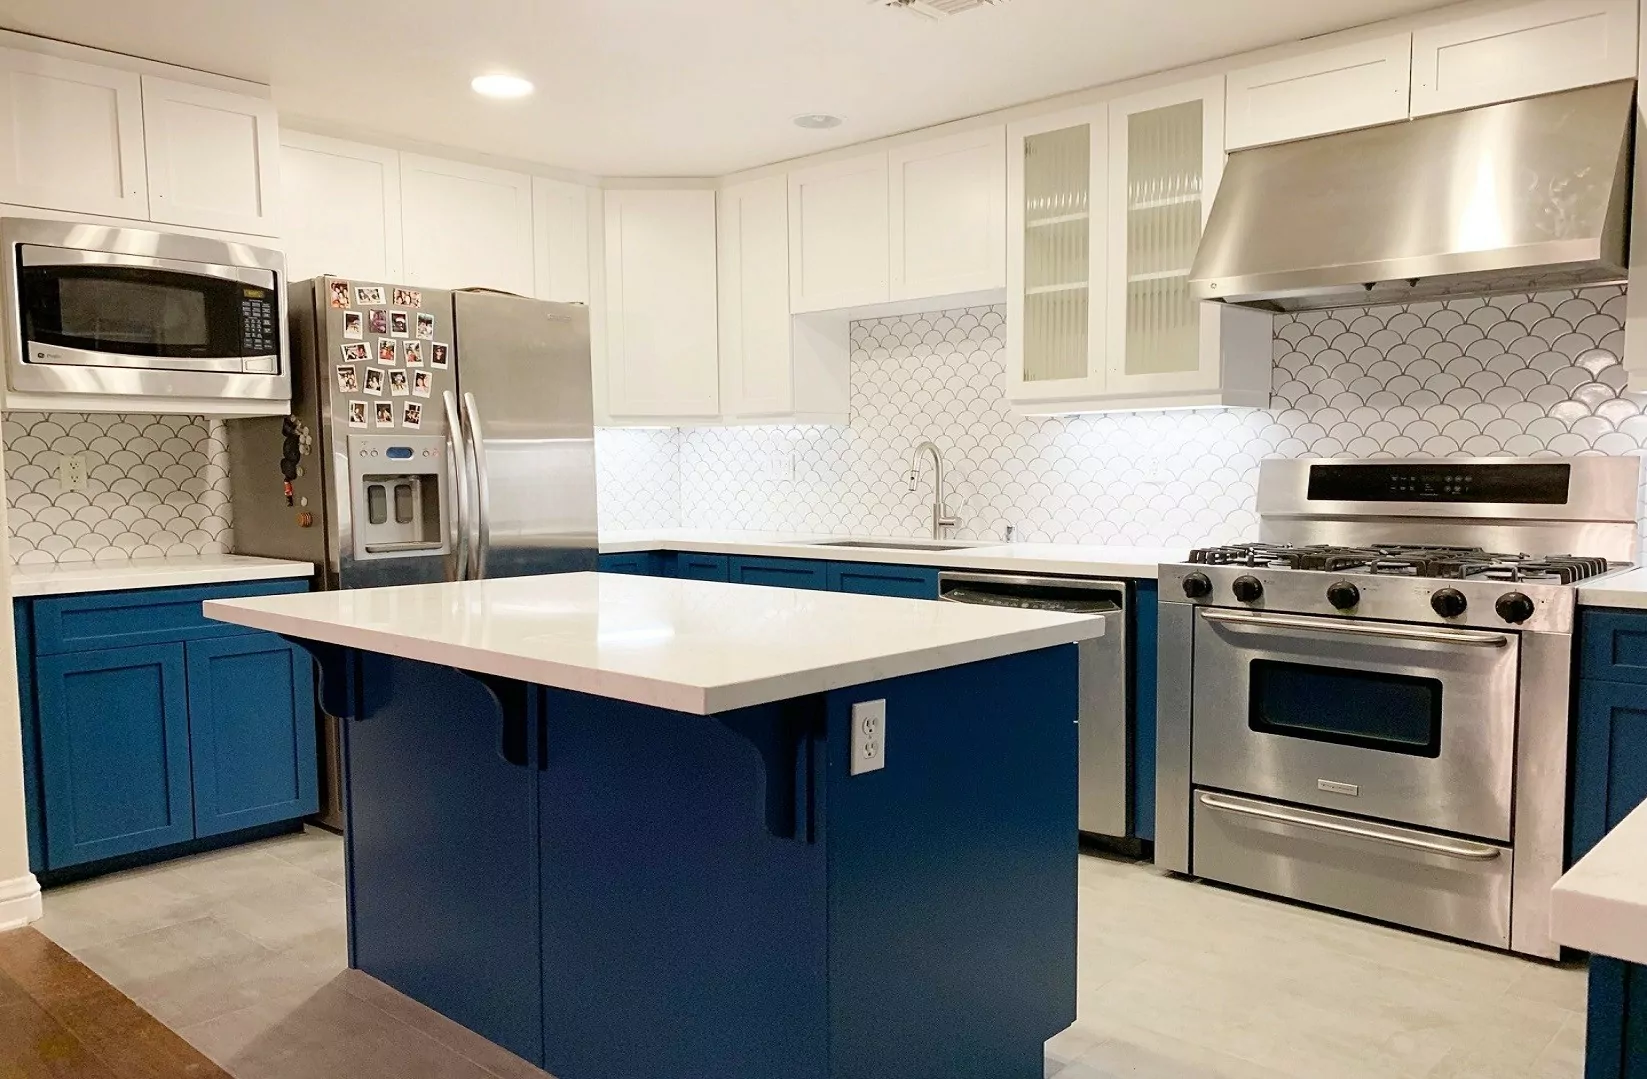 Modern kitchen island ideas 2019 | Groysman Construction Remodeling | 2